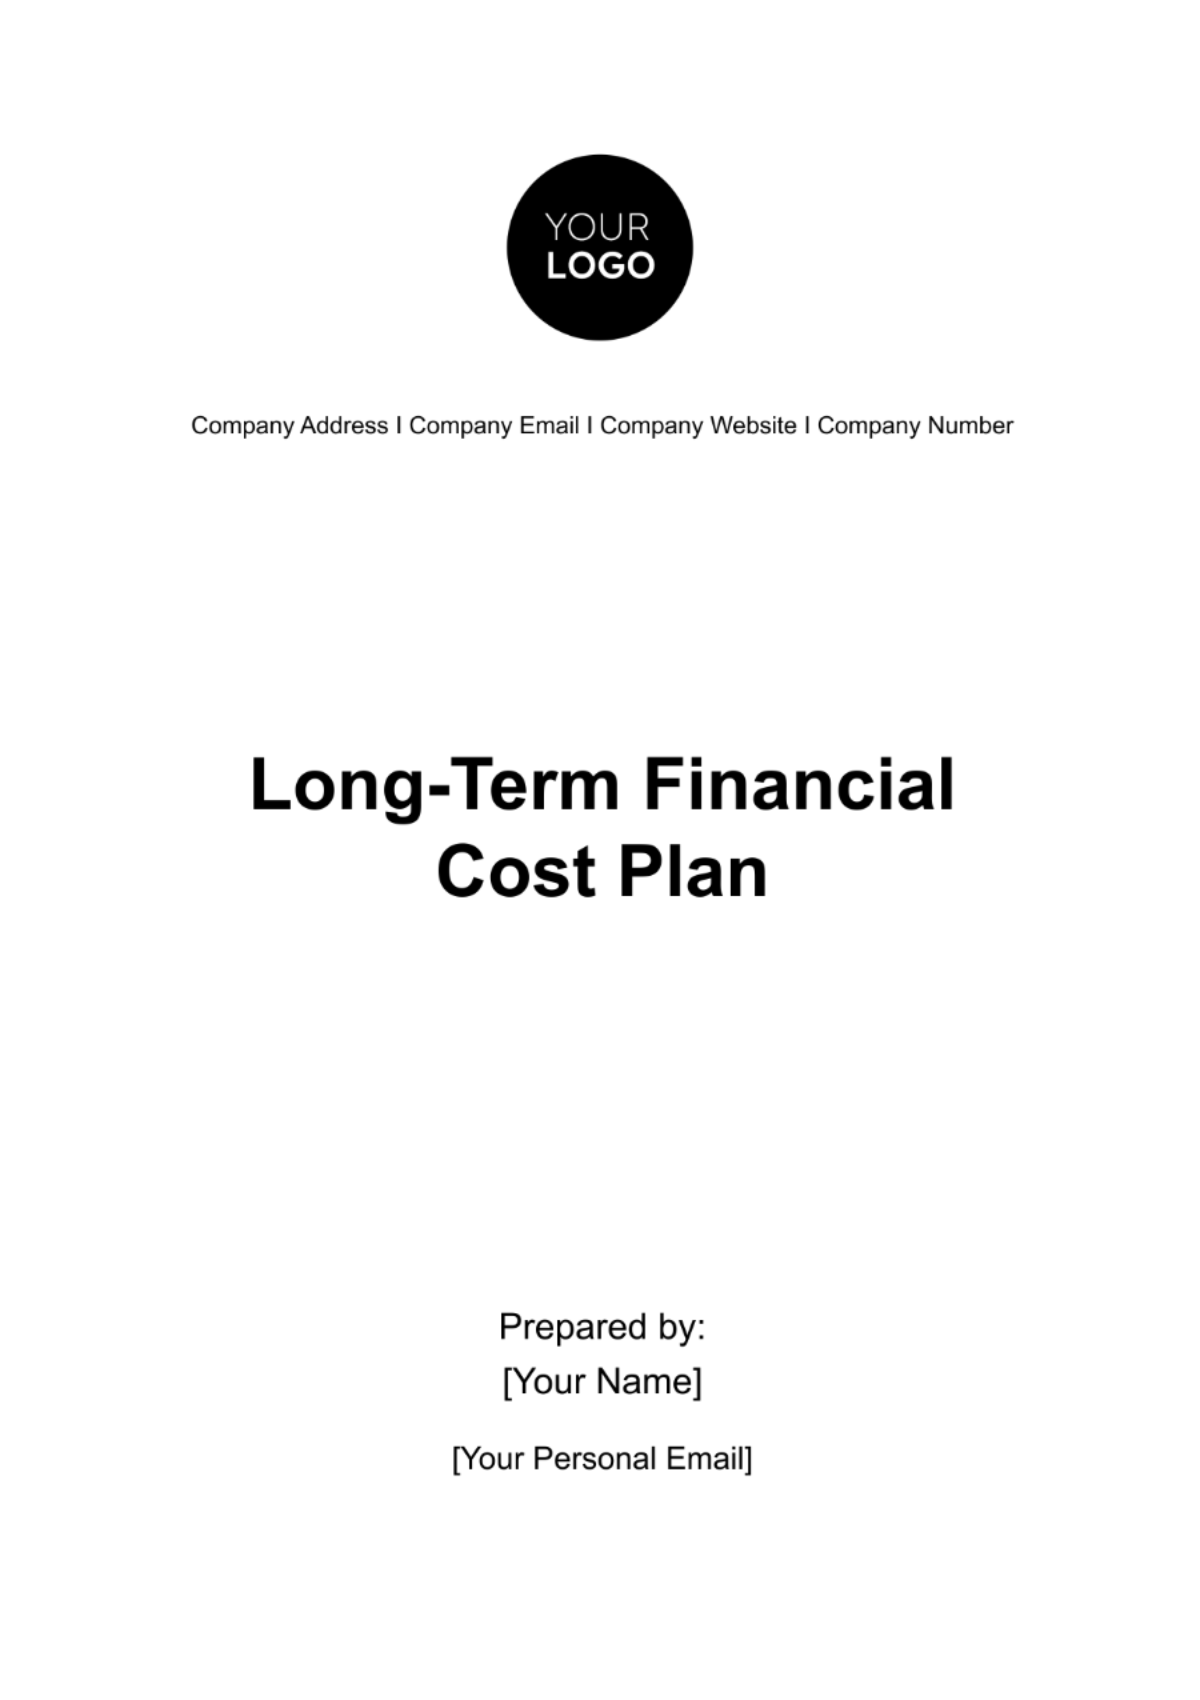 Long-Term Financial Cost Plan Template